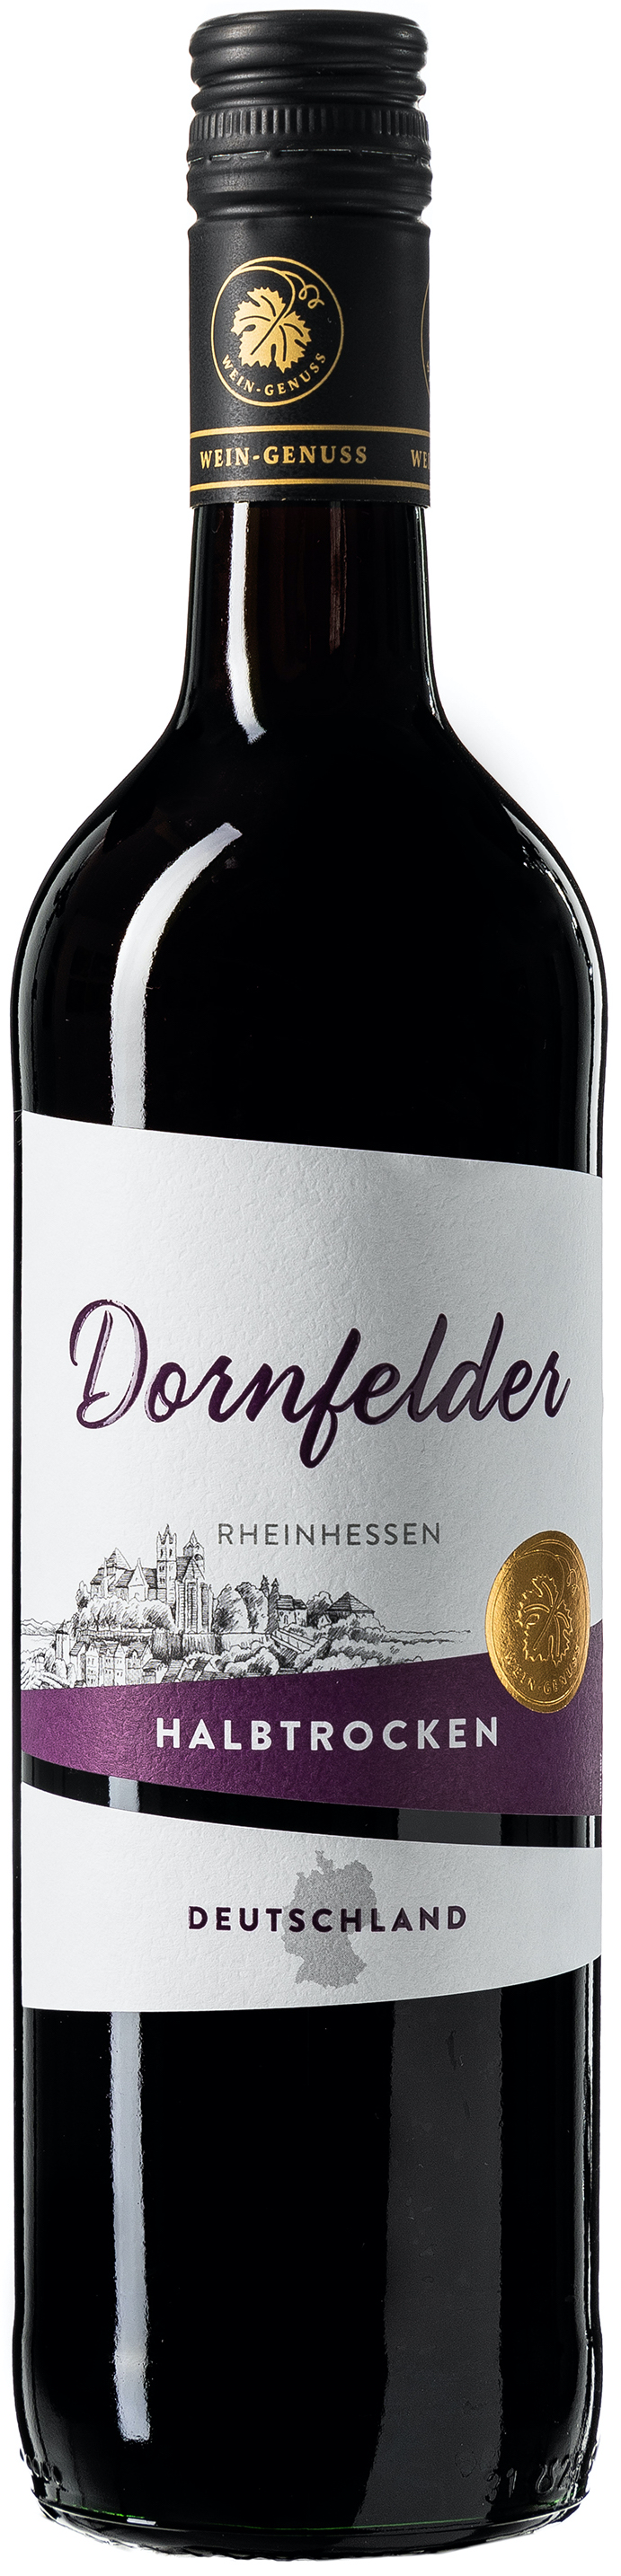 Wein-Genuss Dornfelder halbtrocken 11,5% vol. 0,75L